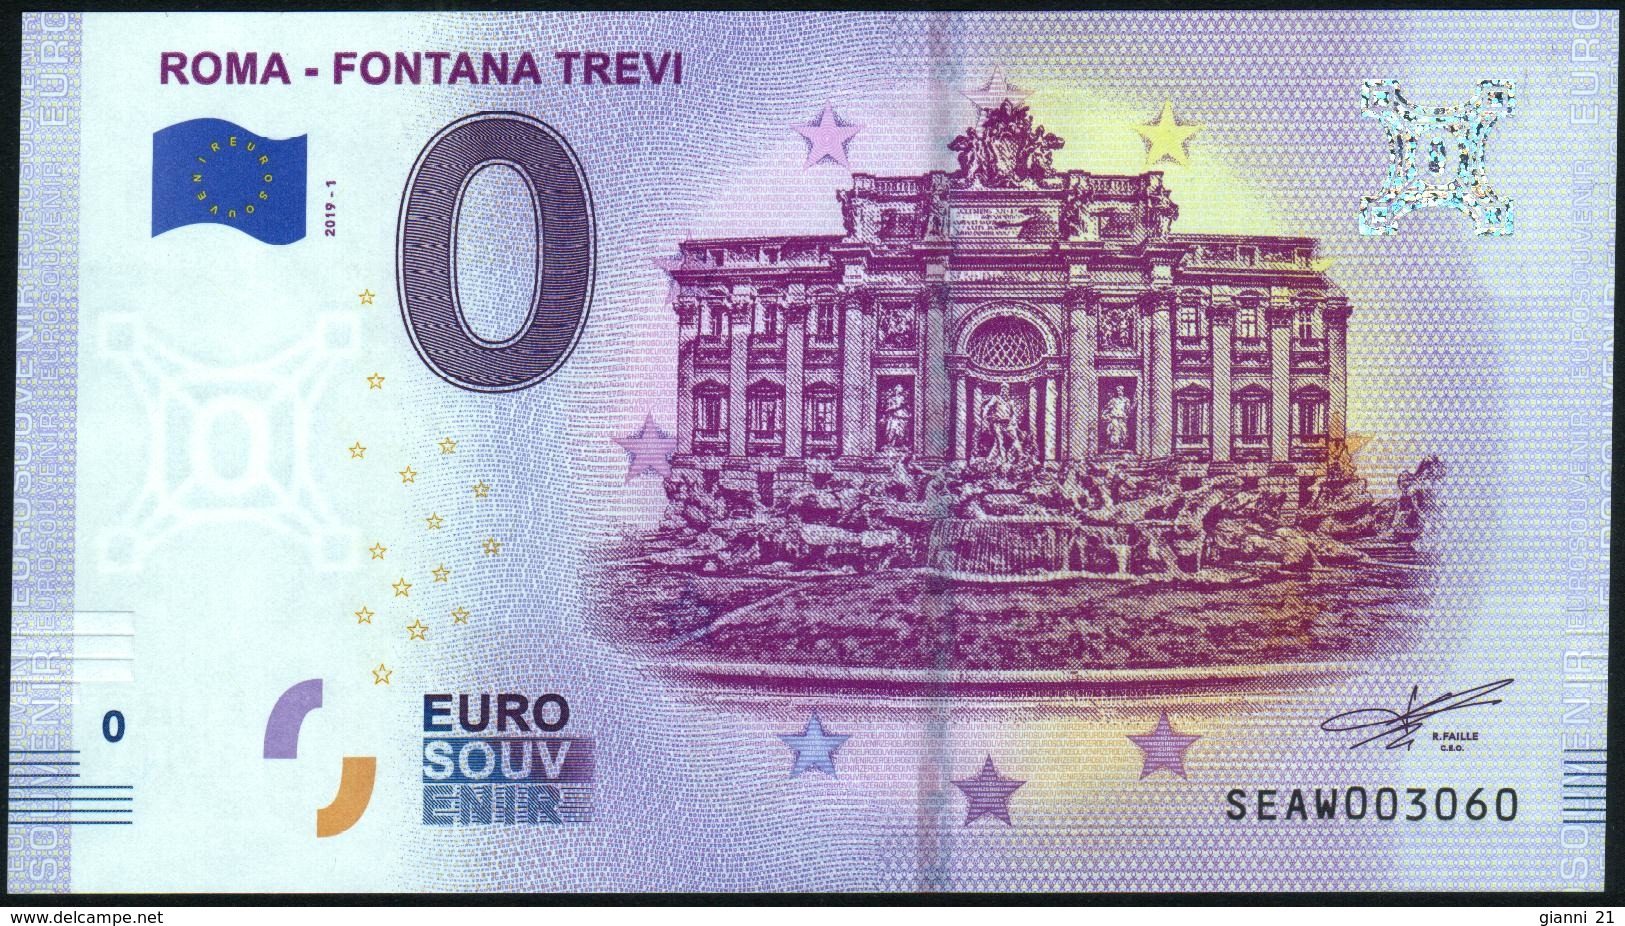 Zero - BILLET EURO O Souvenir - ROMA - FONTANA TREVI 2019-1set UNC {Italy} - Pruebas Privadas